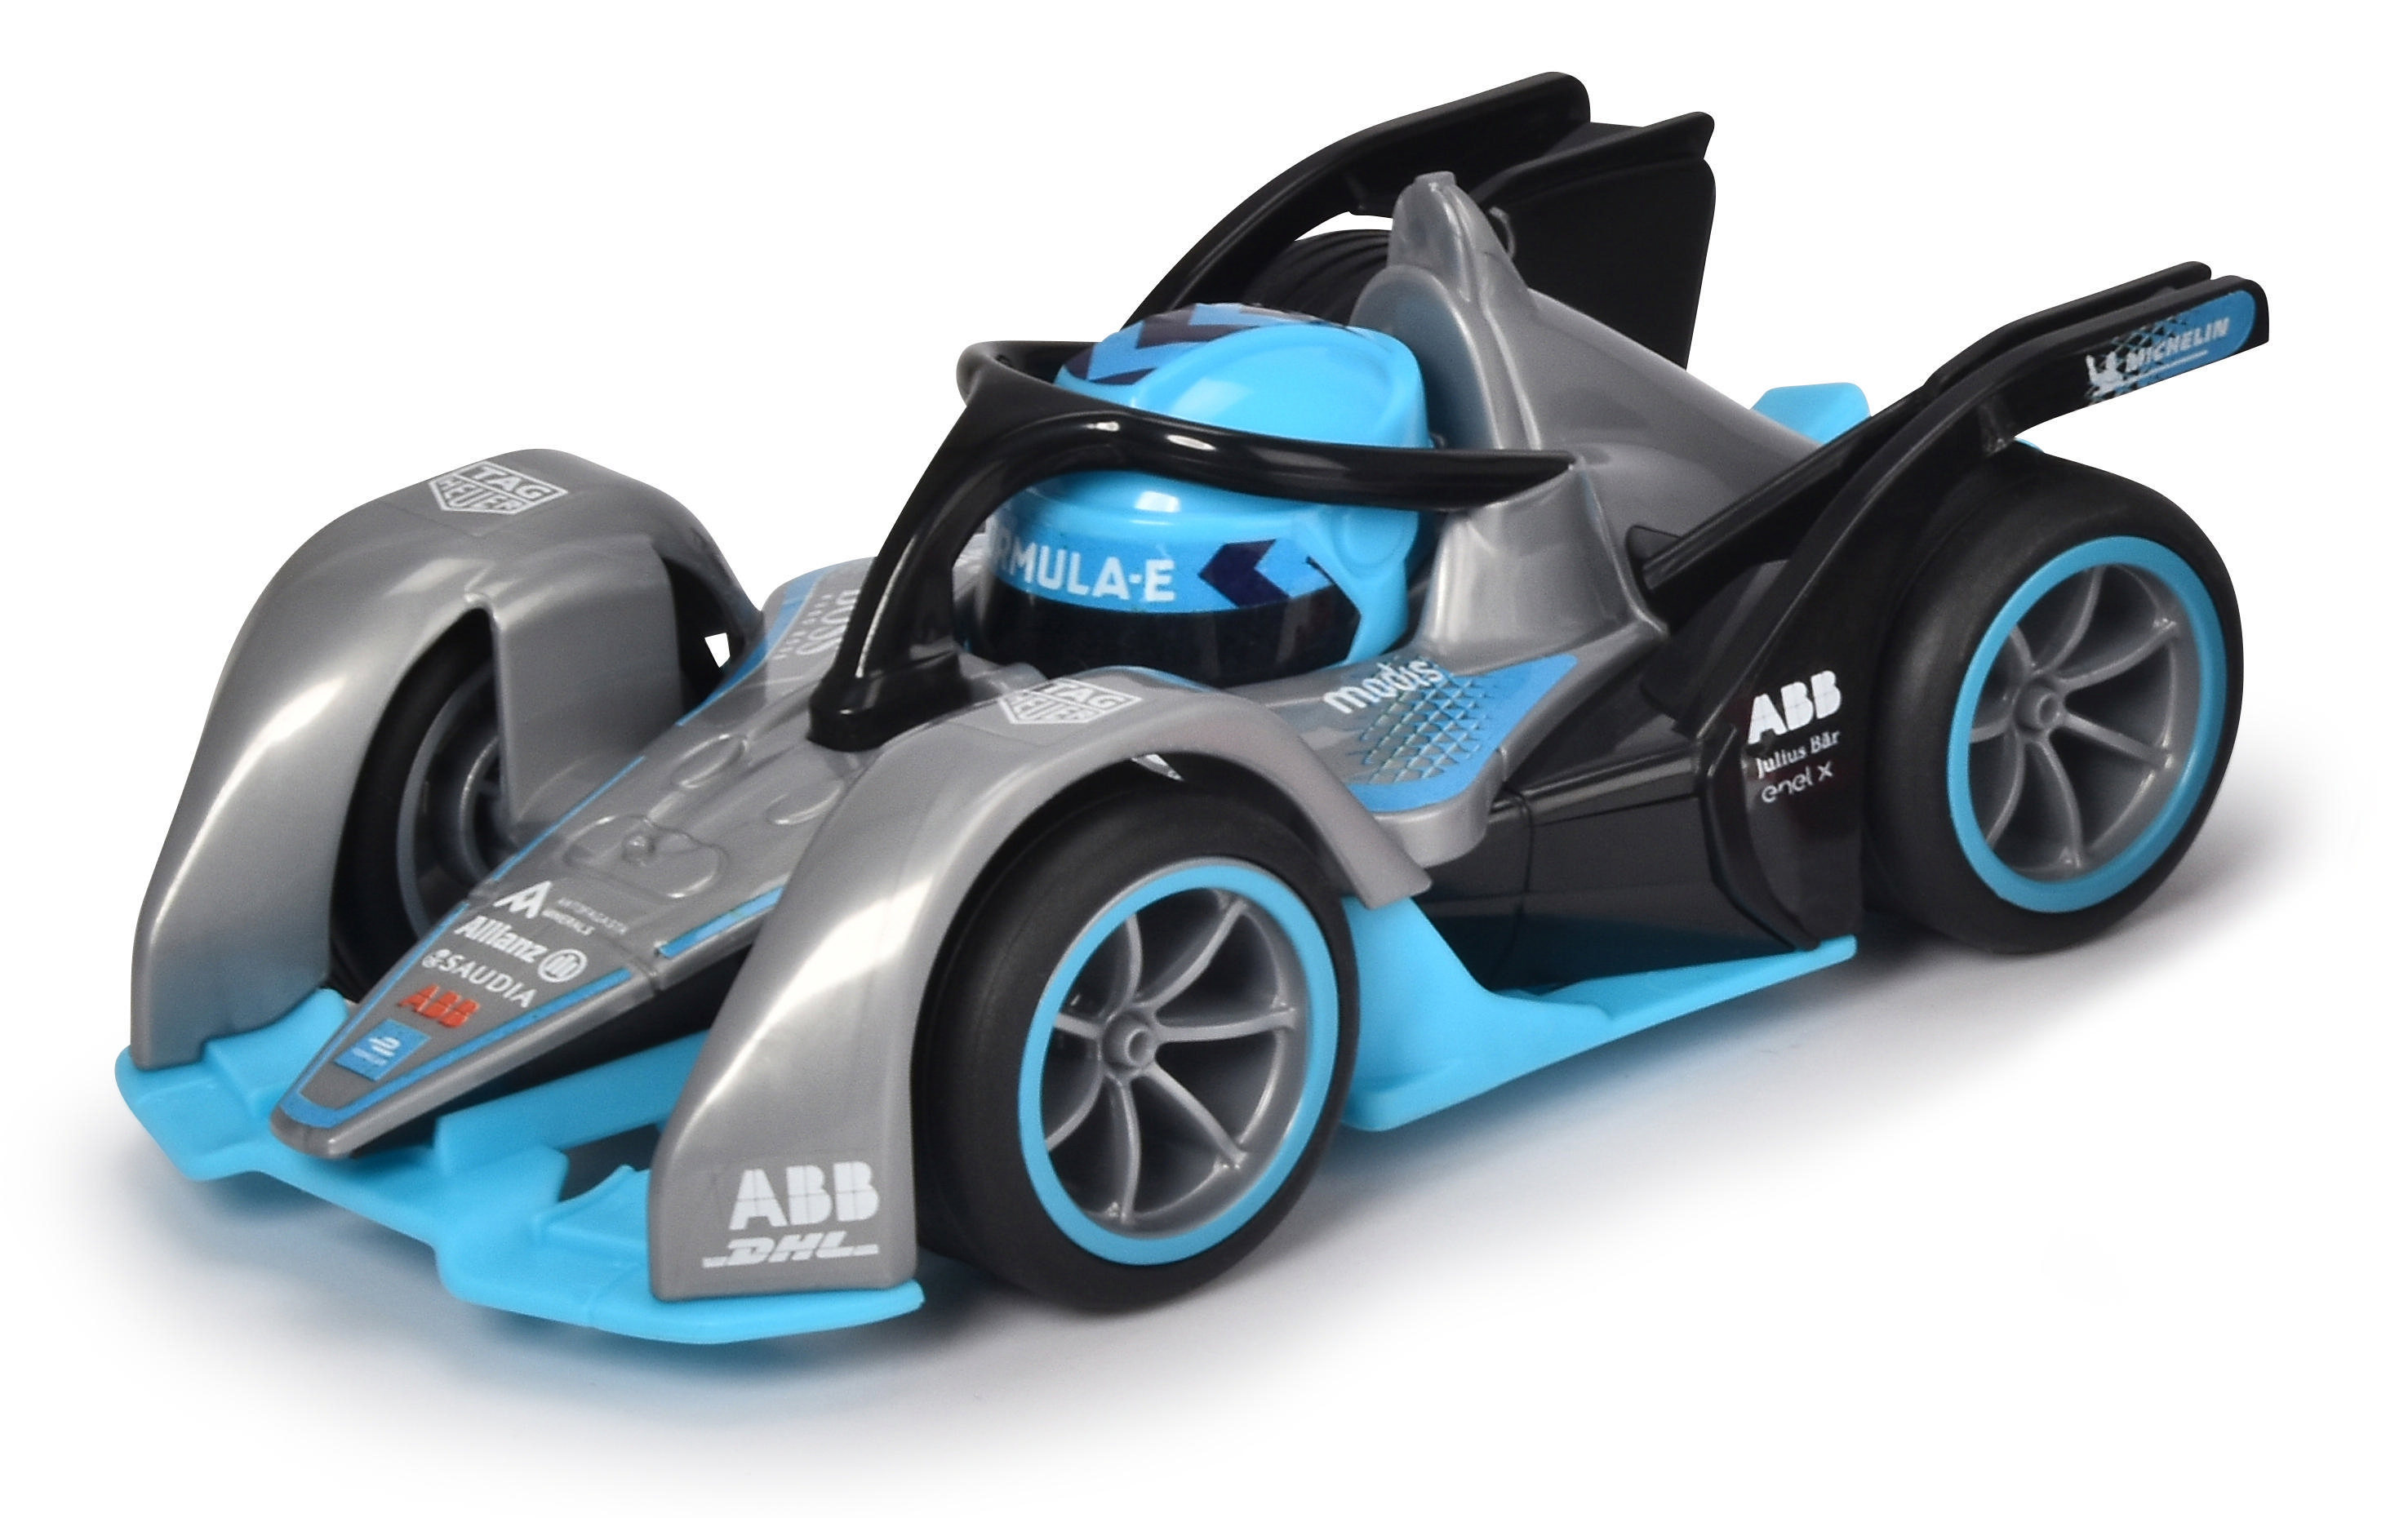 Spielzeugauto 3-sort. Formula Racer, DICKIE-TOYS Mehrfarbig - E Pullstring